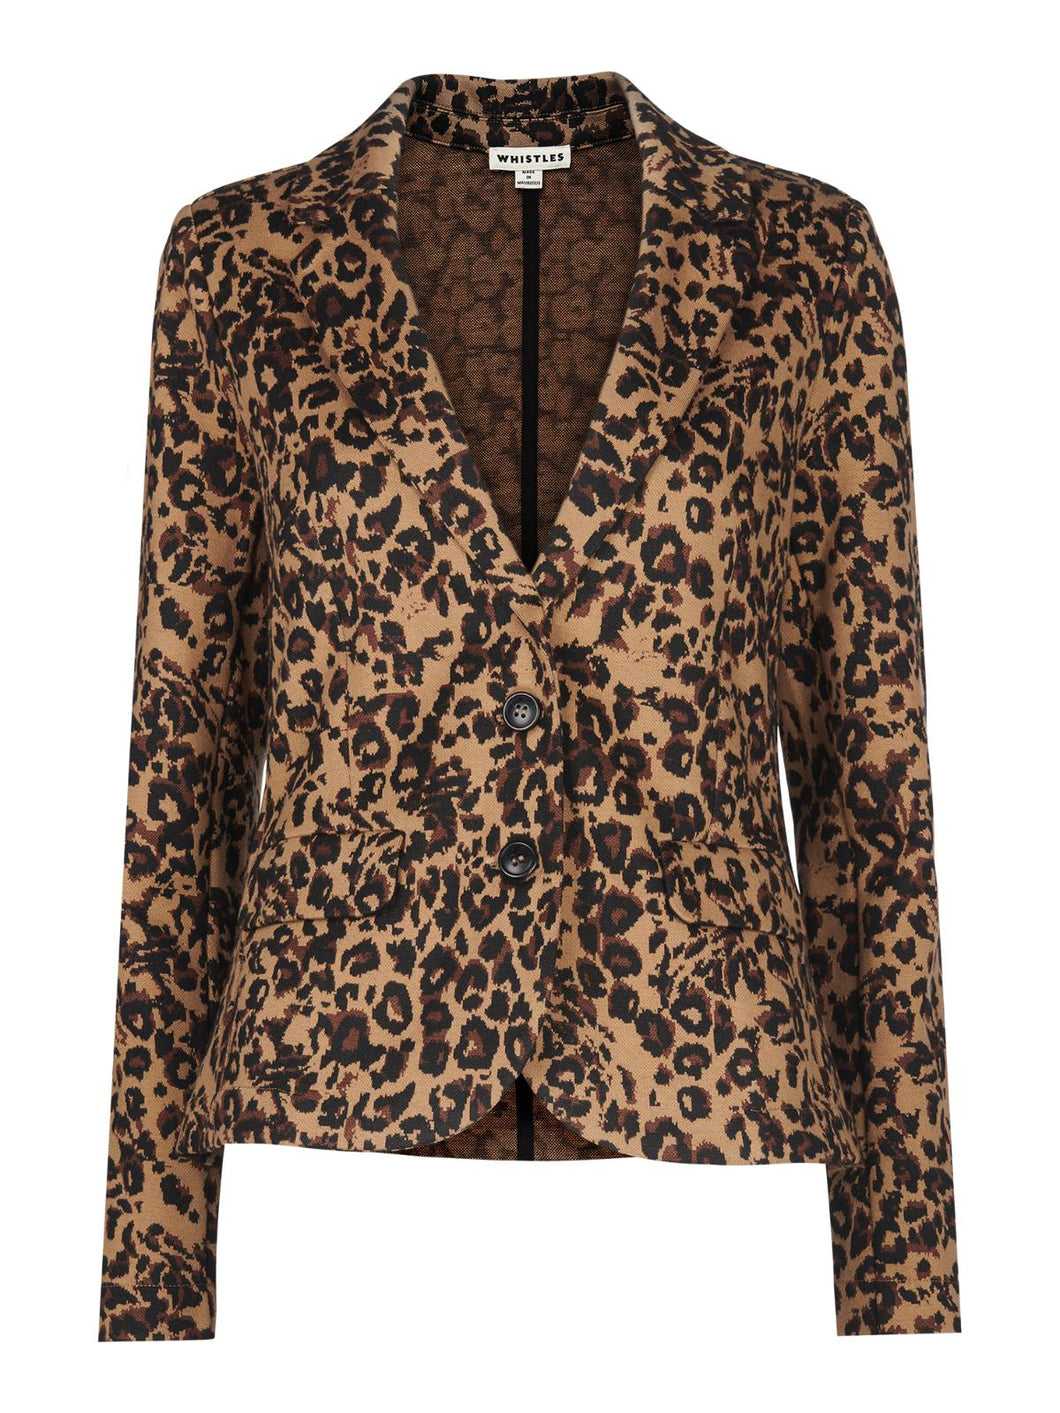 WHISTLES Animal Jacquard Jersey Jacket Brown Leopard Print UK6 RRP95 BNWT